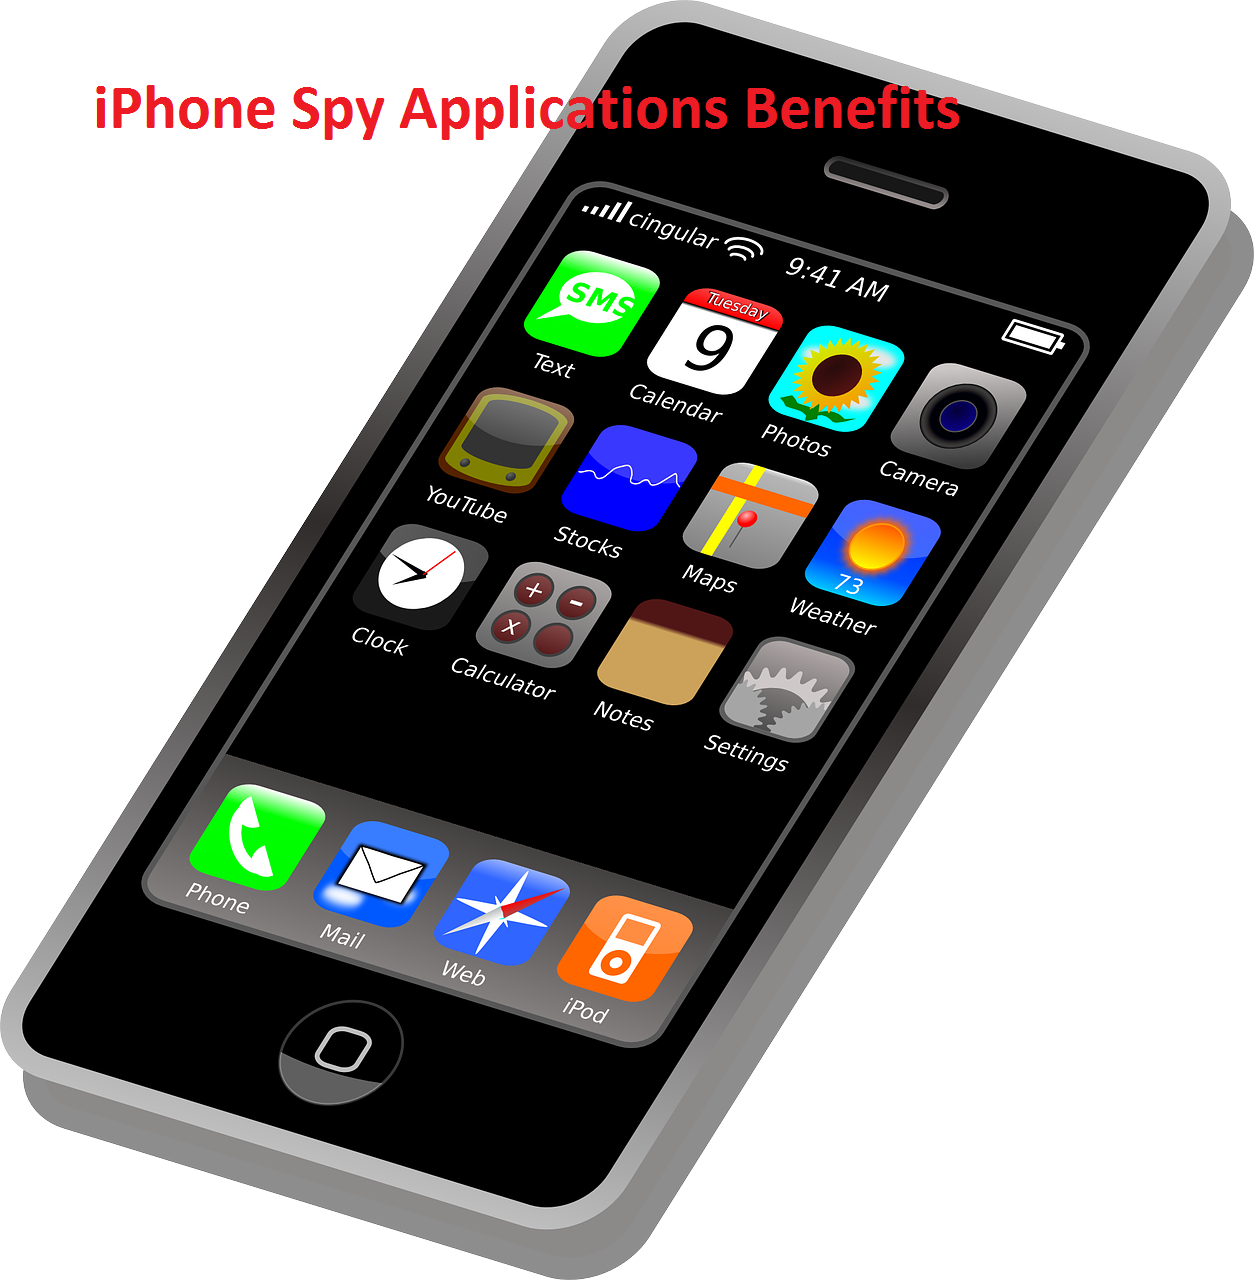 iPhone Spy ApplicationsÂ Benefits